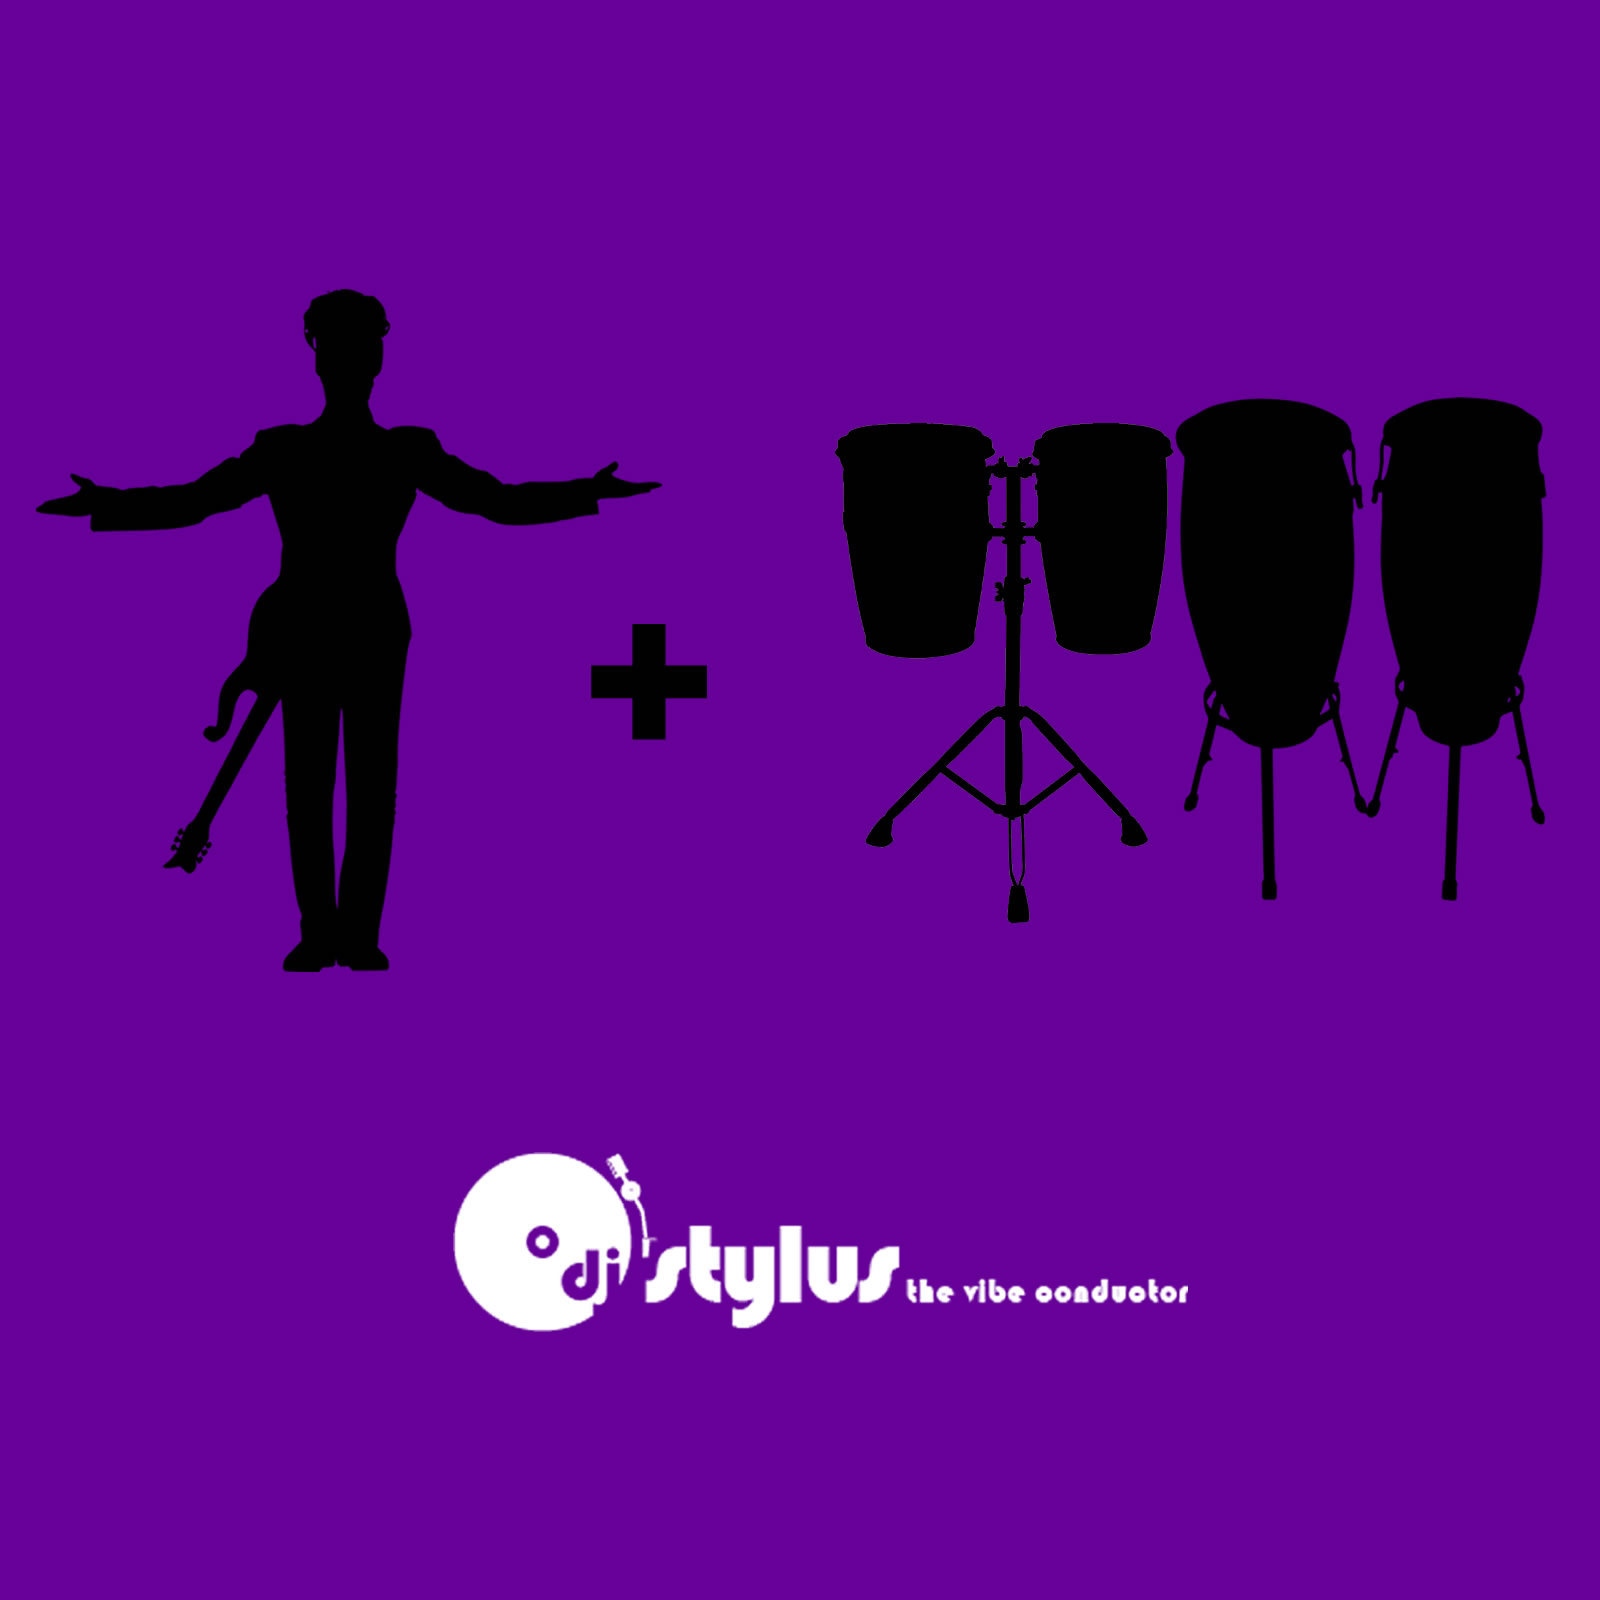 DJ Stylus - The Vibe Conductor - Purple Pockets